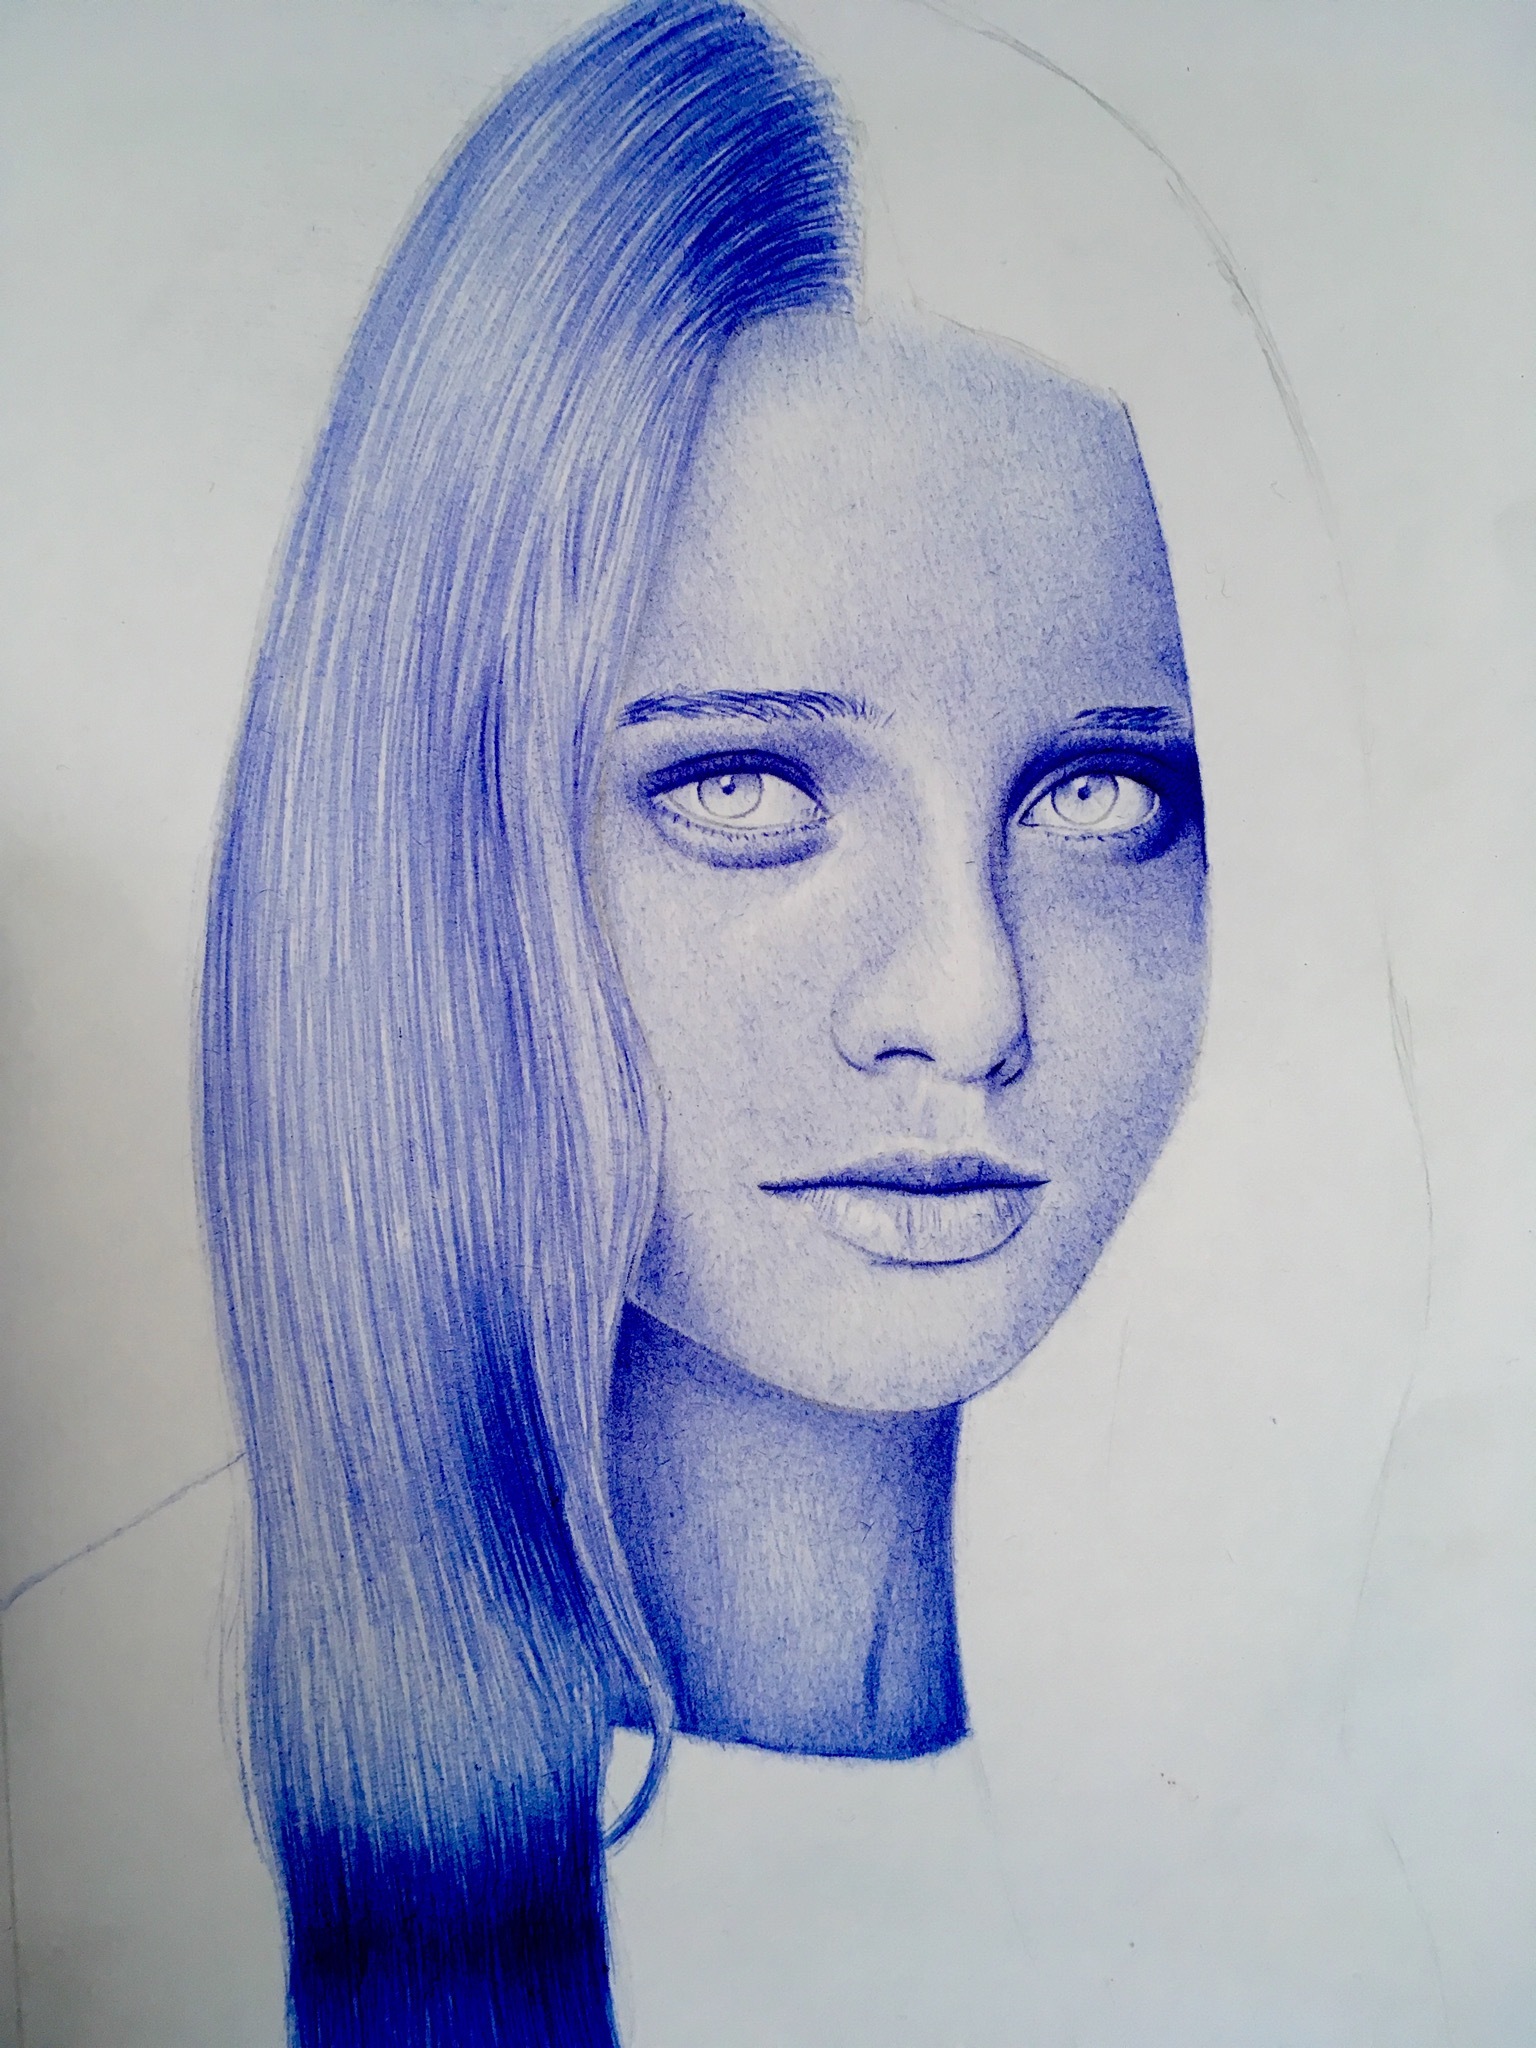 Process - My, Ball pen, Artist, Portrait, Realism, Beautiful girl, Process